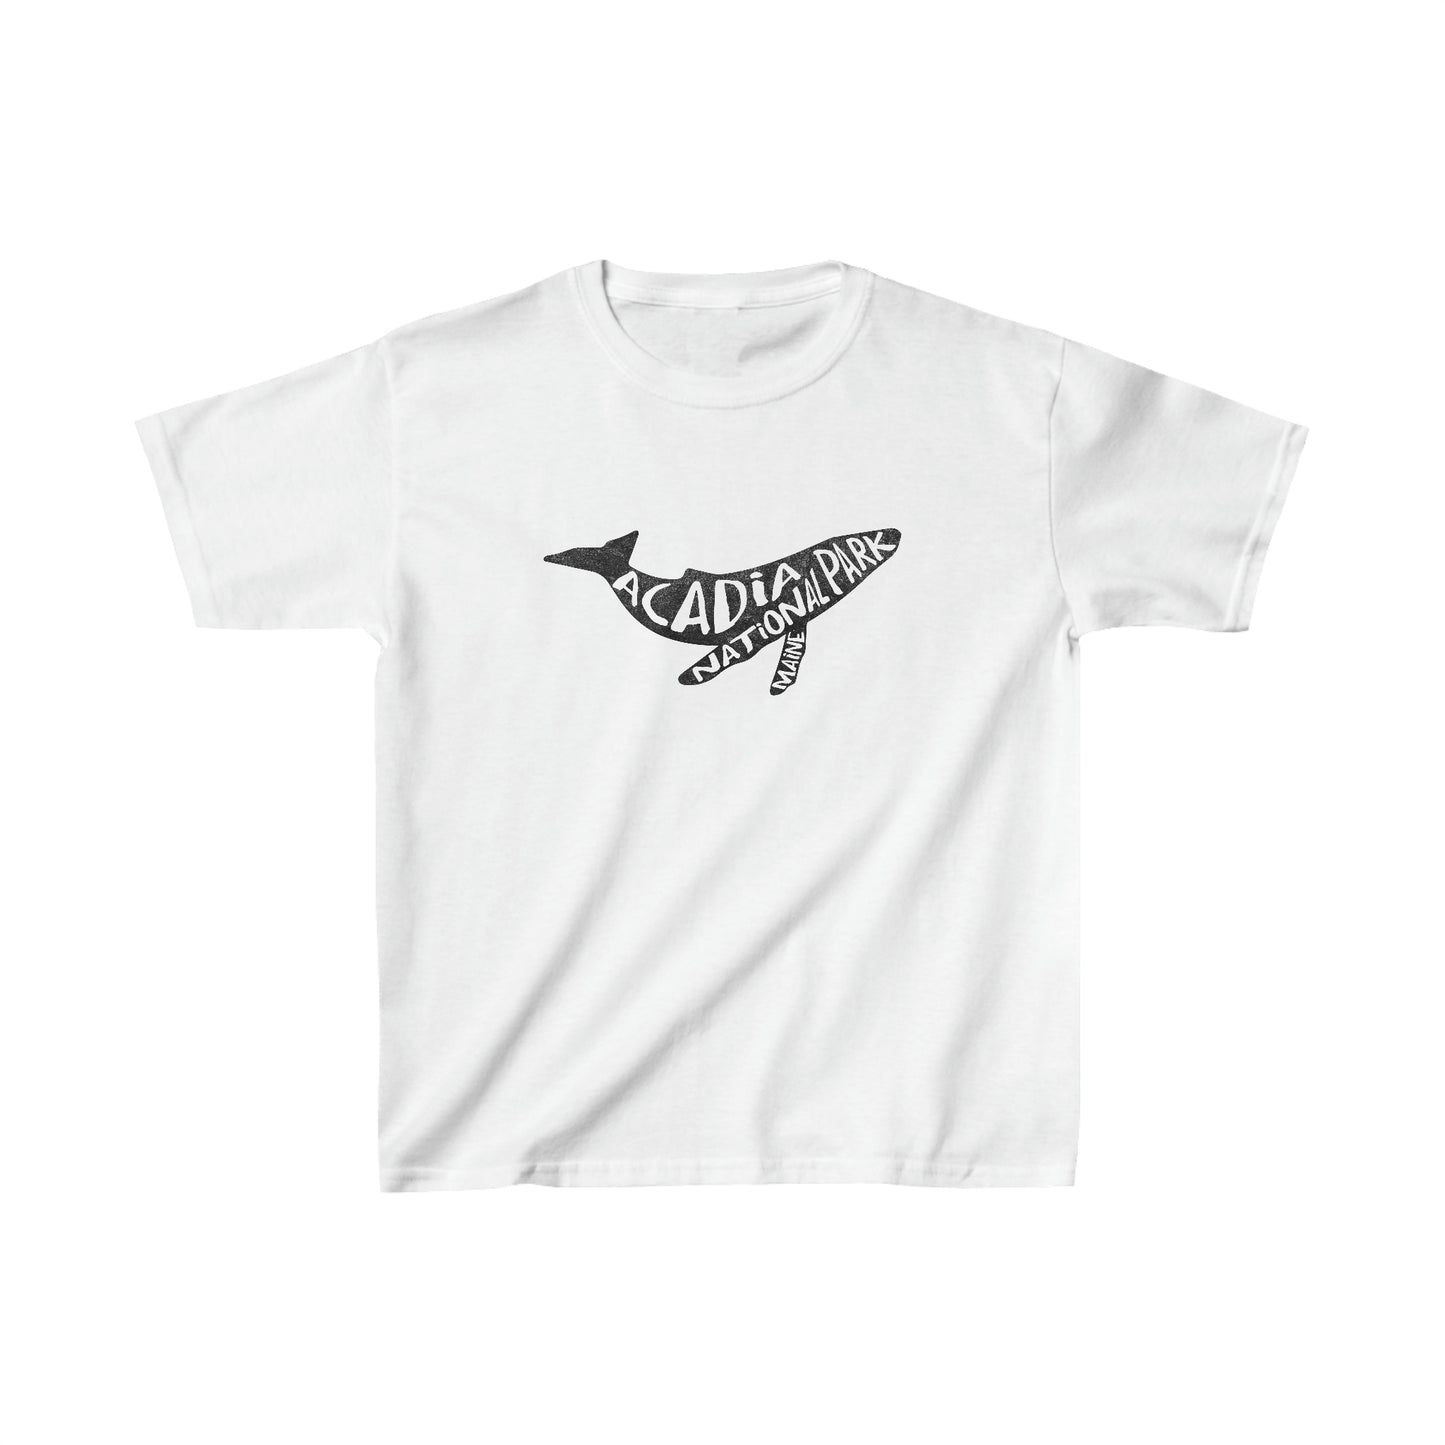 Acadia National Park Child T-Shirt - Humpback Whale Design